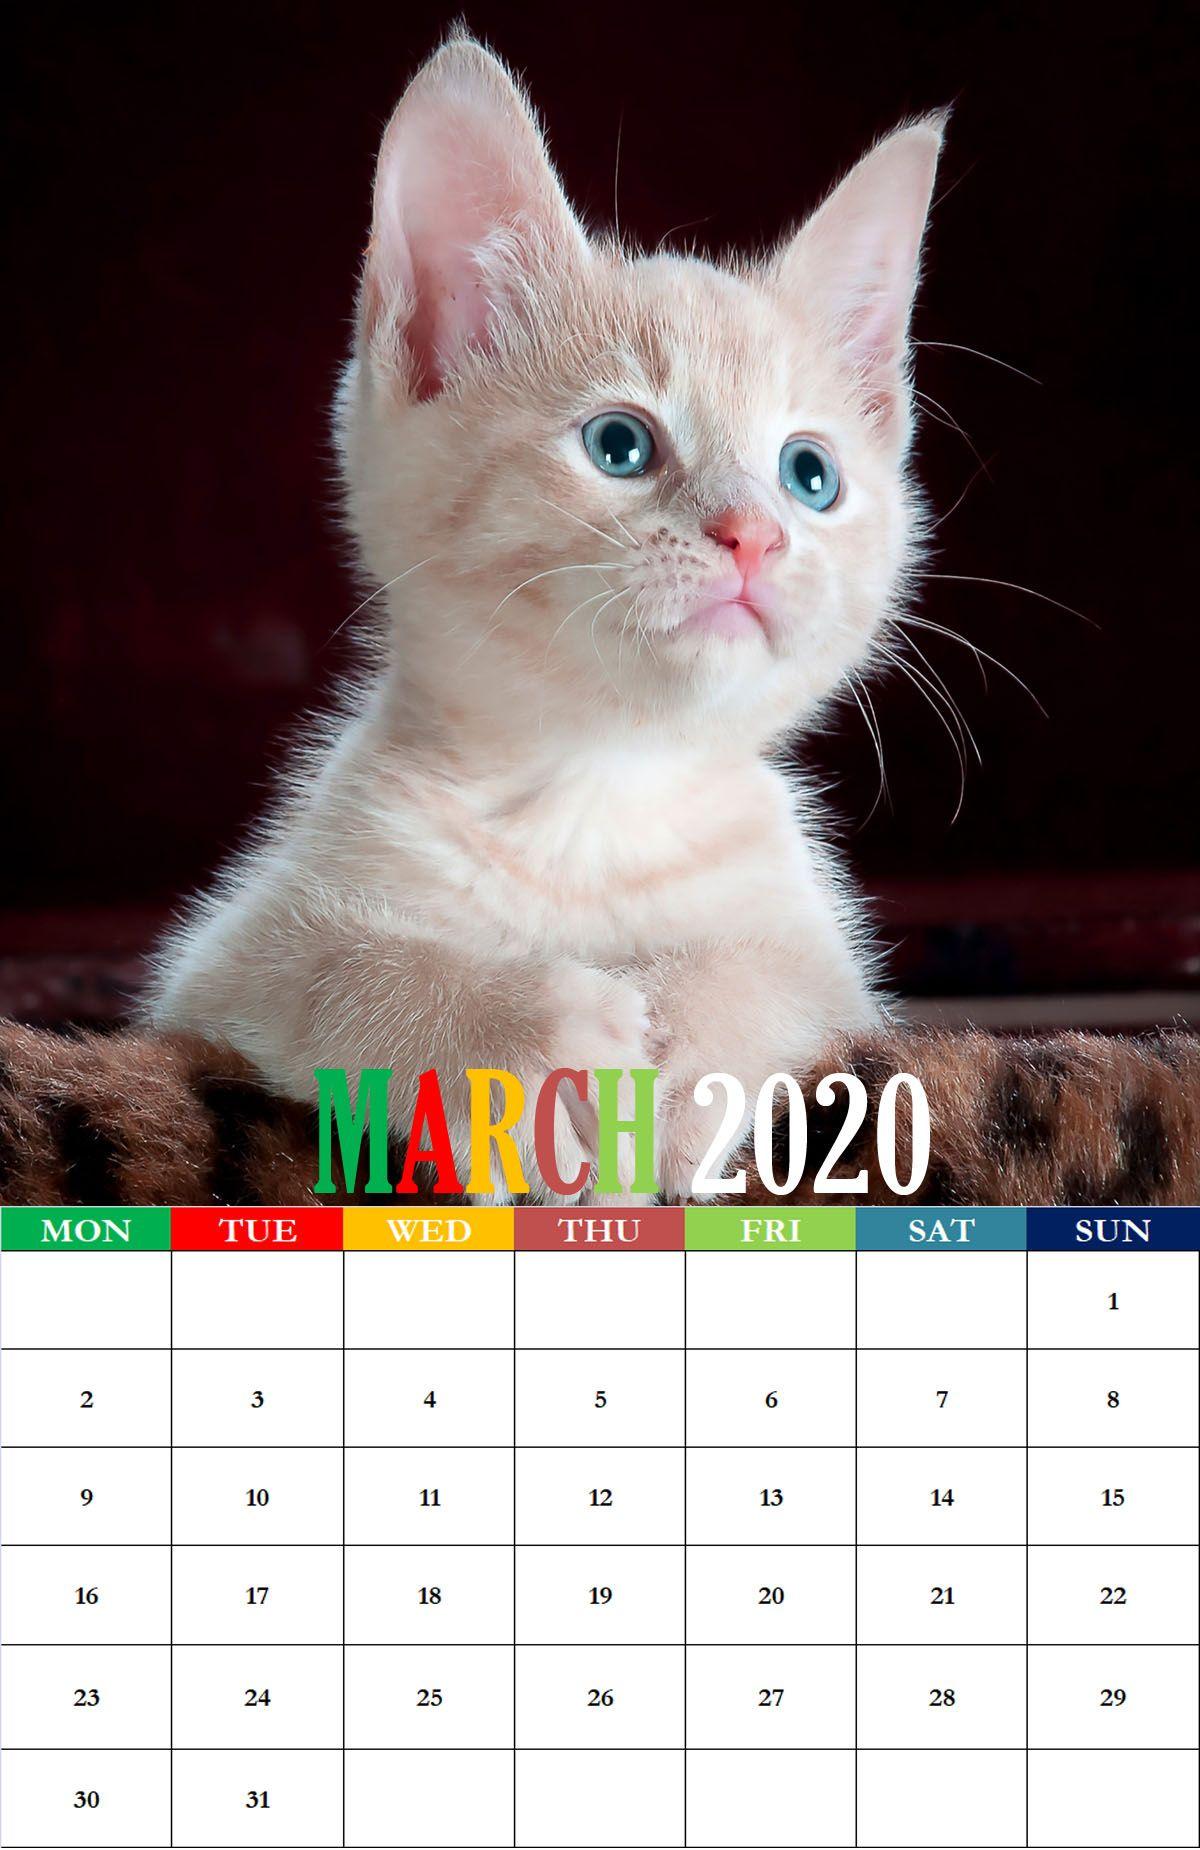 March Calendar Wallpaper For iPhone, Desktop, Mobile, Tablets